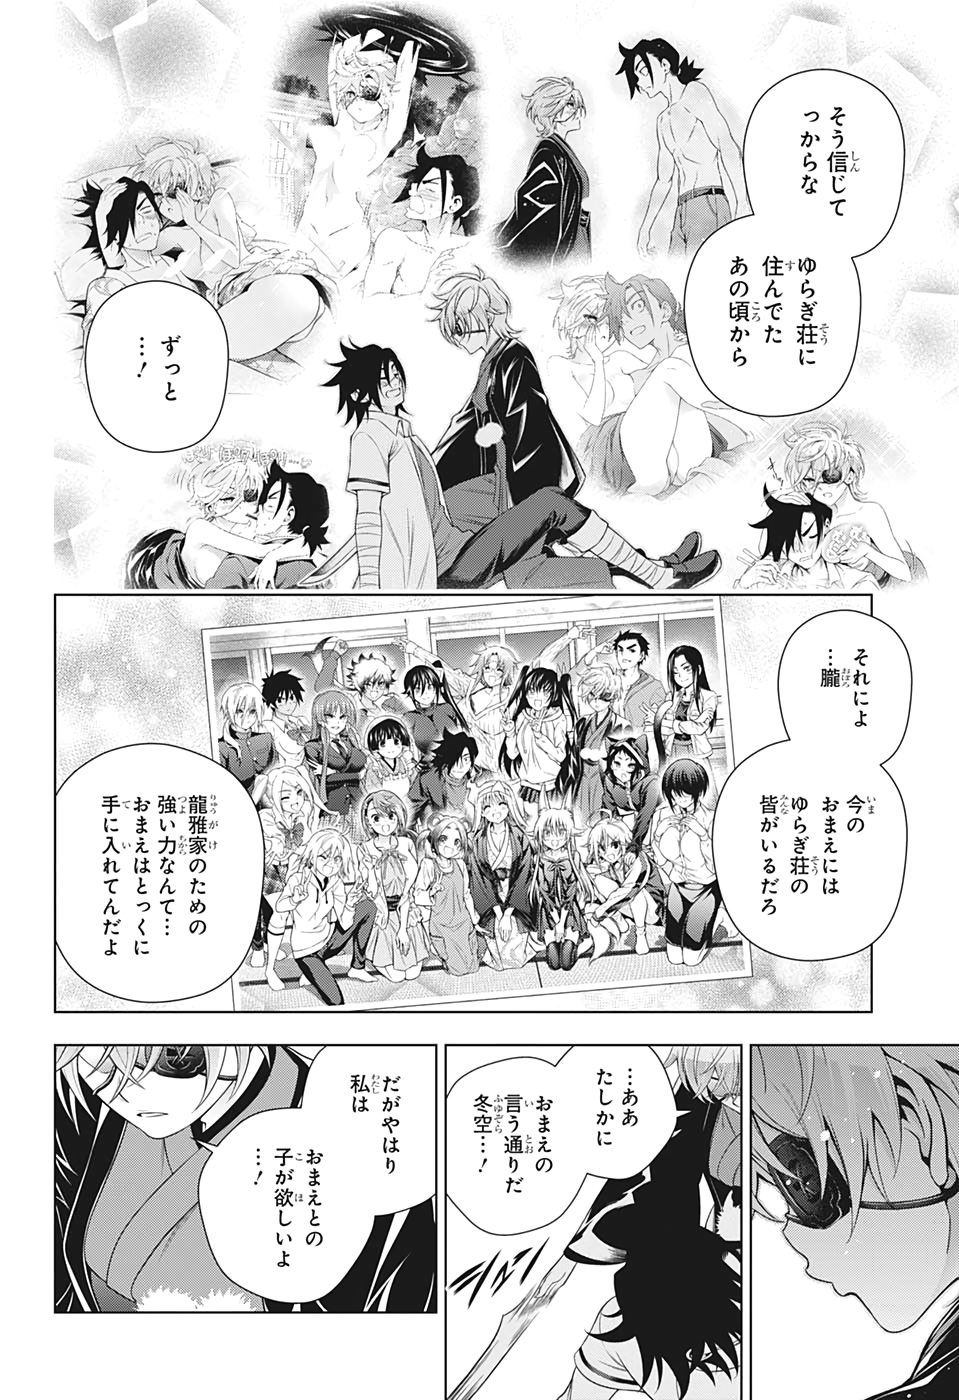 Yuragi-sou no Yuuna-san - ゆらぎ荘の幽奈さん - Chapter 201 - Page 18